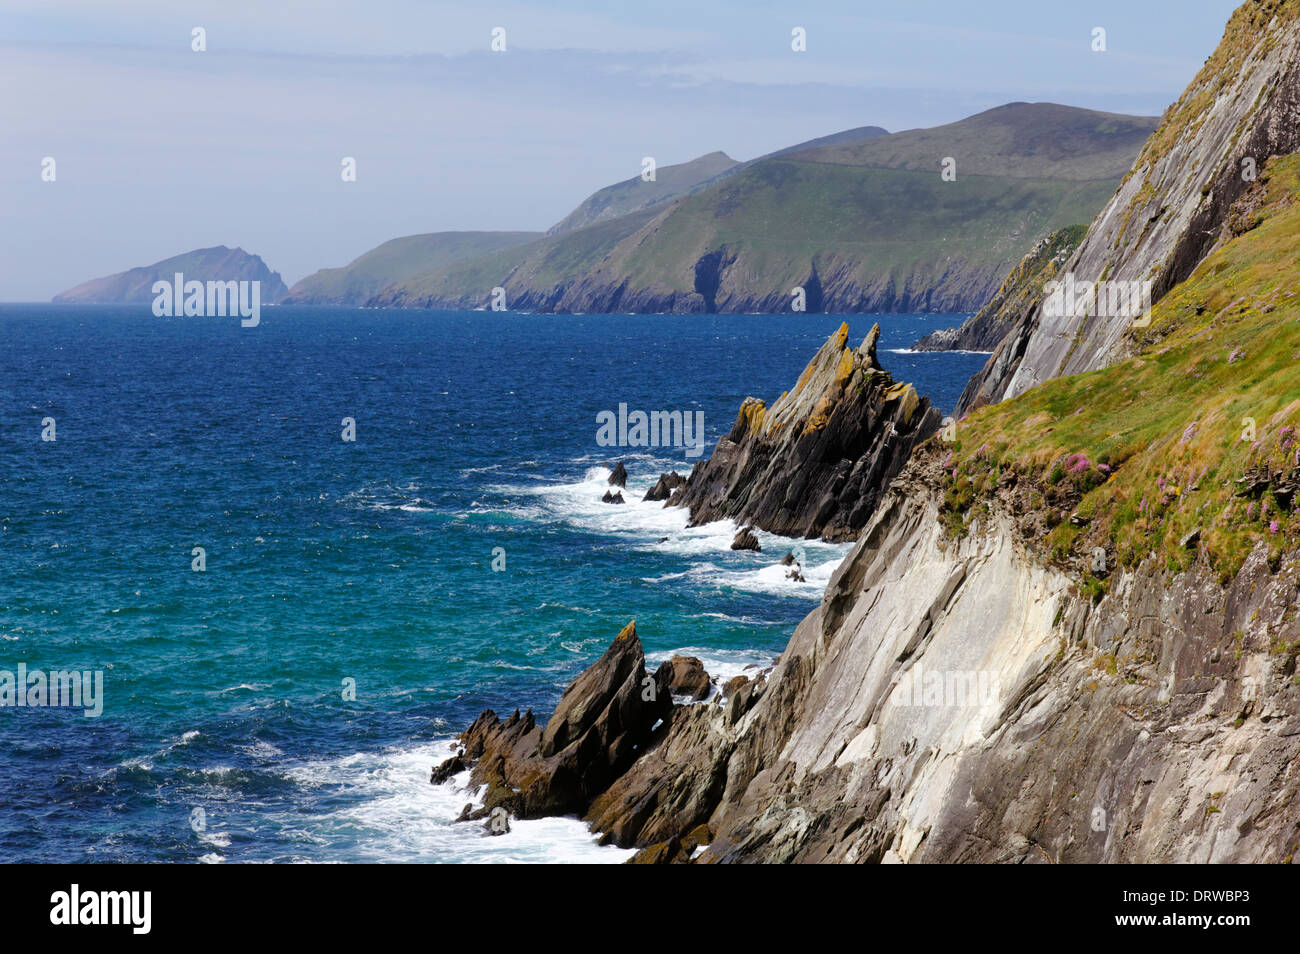 The coastline of the Dingle Peninsula in County Kerry, Ireland Stock Photo